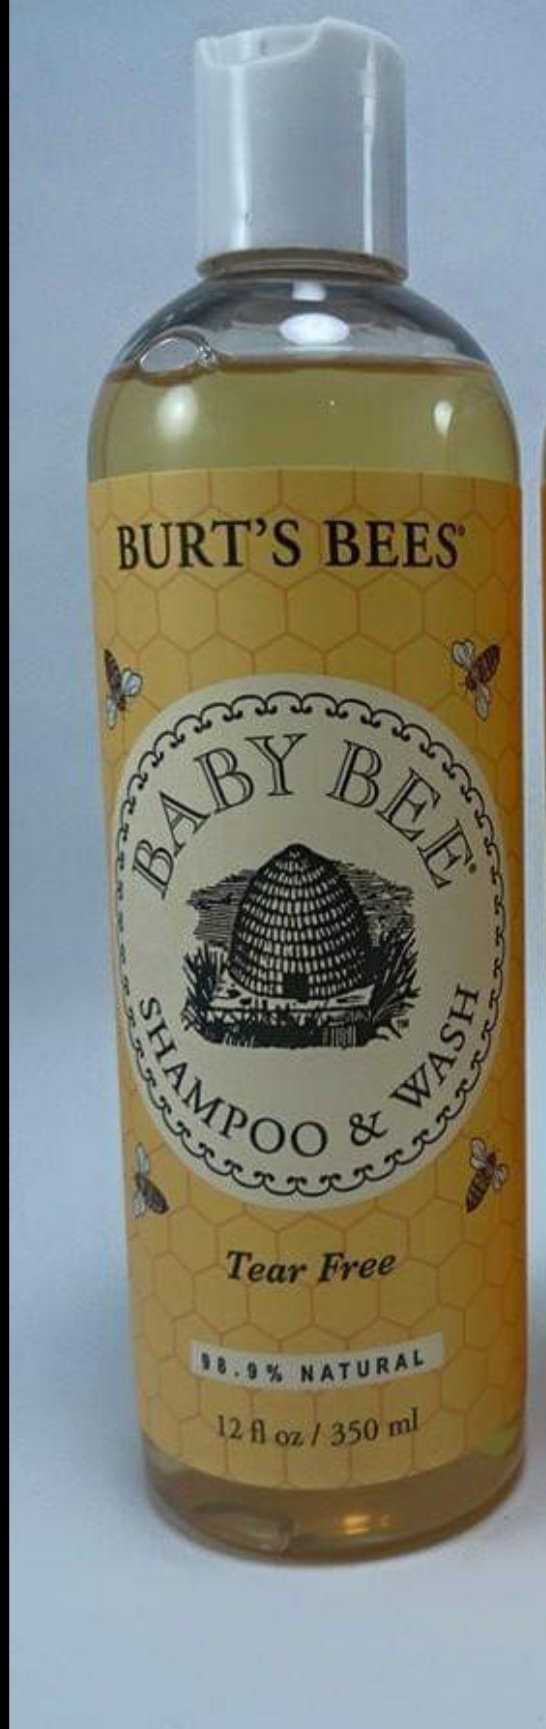 Burt's Bees Baby Bee Shampoo & Wash Reviews, Ingredients ...